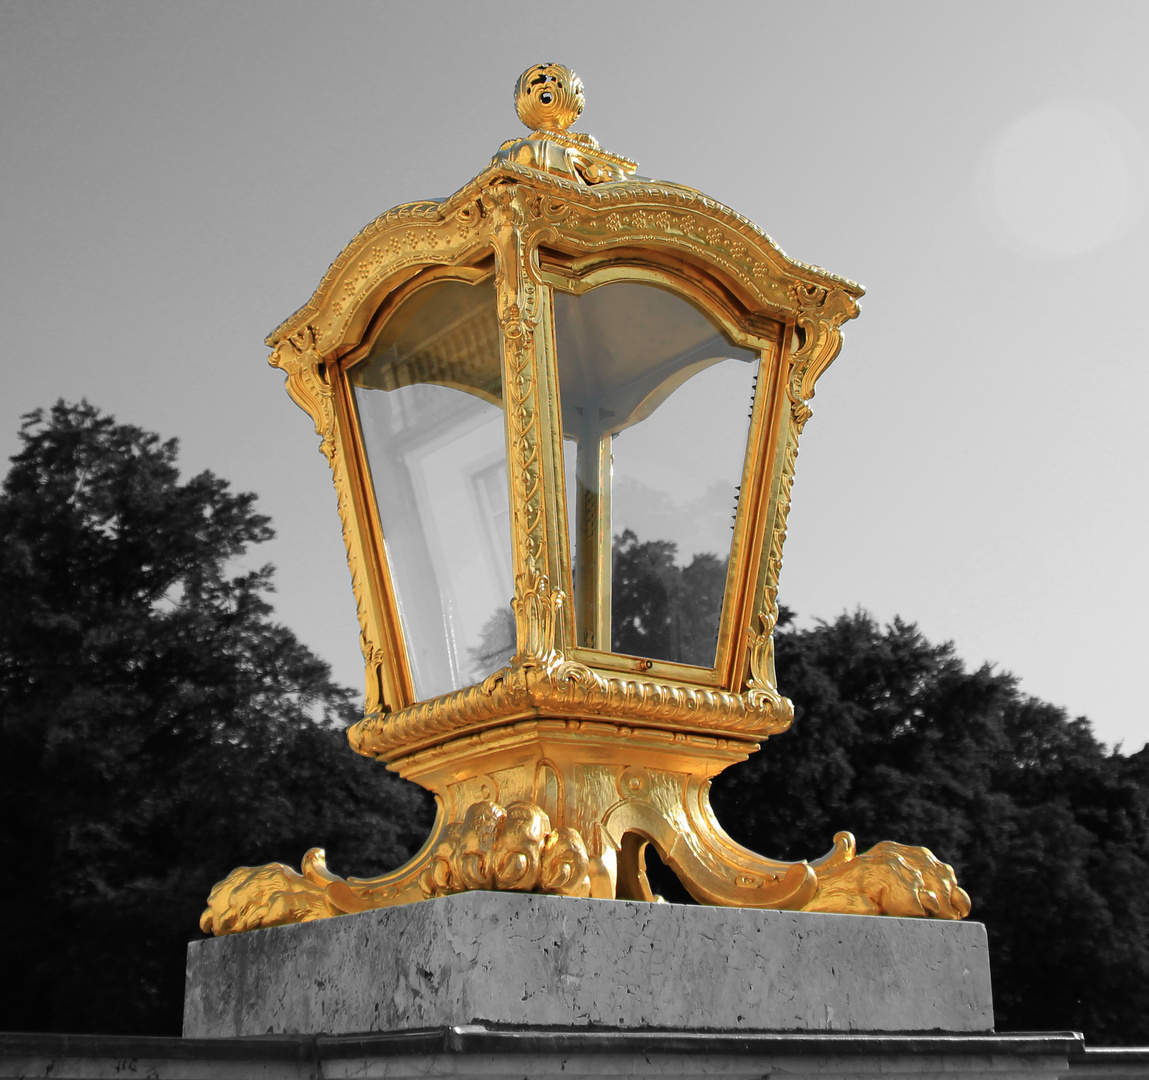 the golden lamp